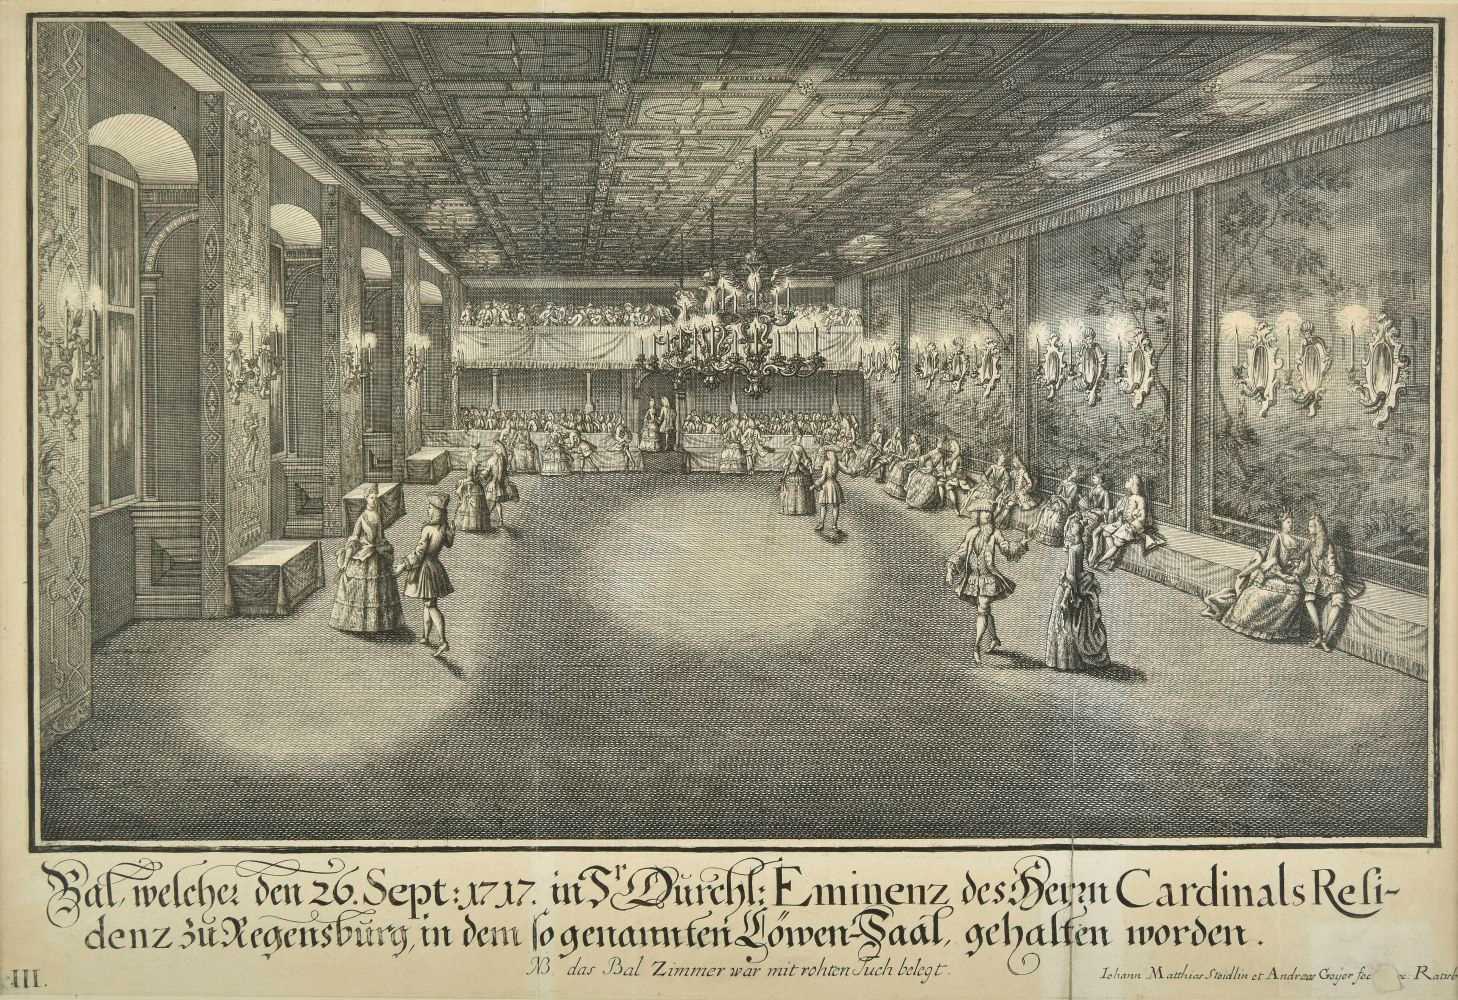 Lot 90 - Steidlin (Johann Matthias, 1717-1754 & Geyer, Andreas, -1729). Bal, 1717-18